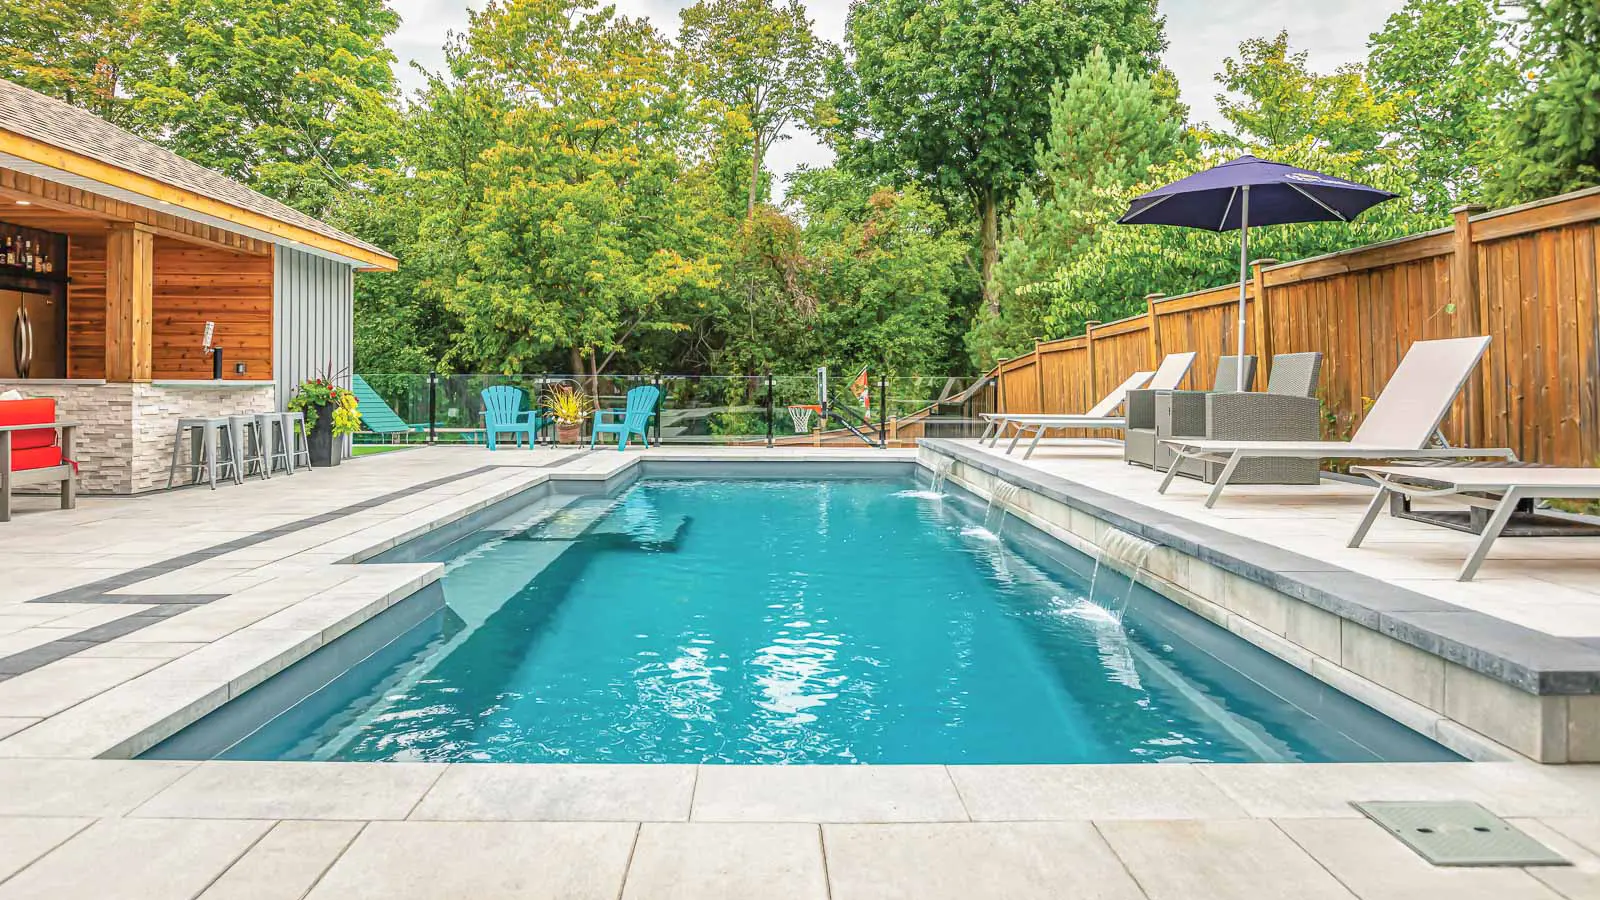 The Elegance, a fiberglass pool with a cut-out step design